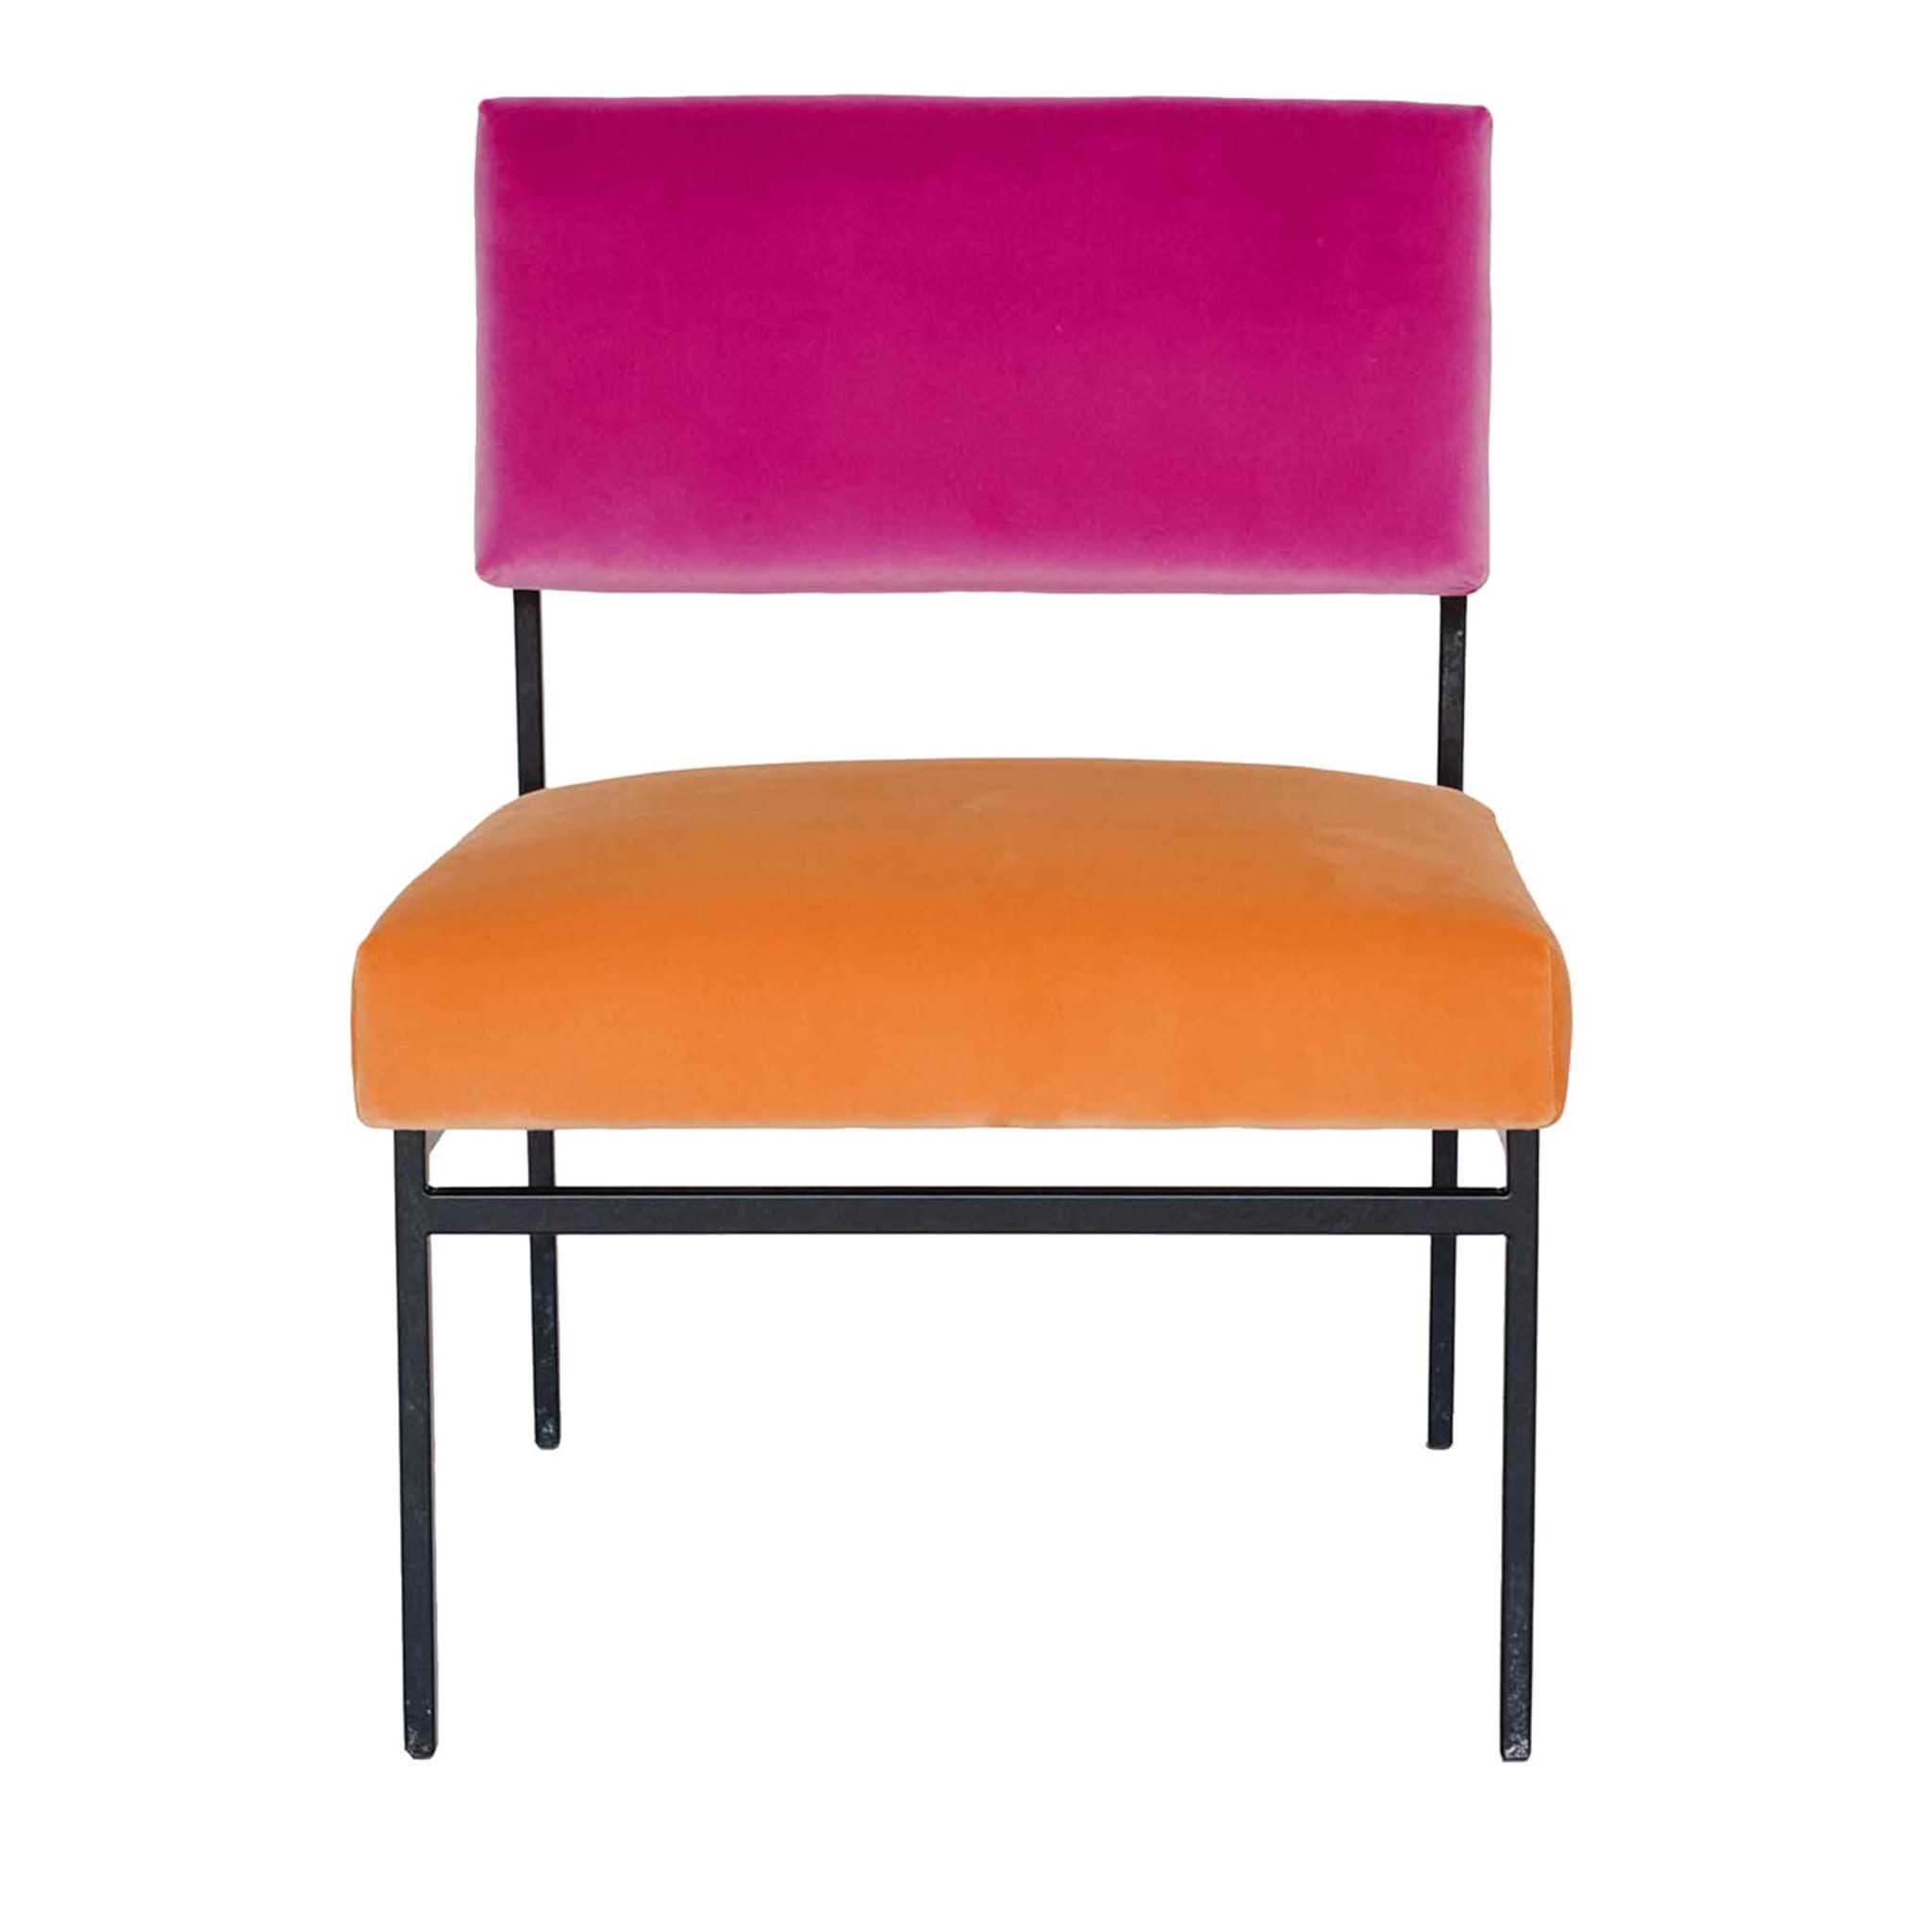 Aurea Orange and Pink Velvet Lounge Chair - Main view